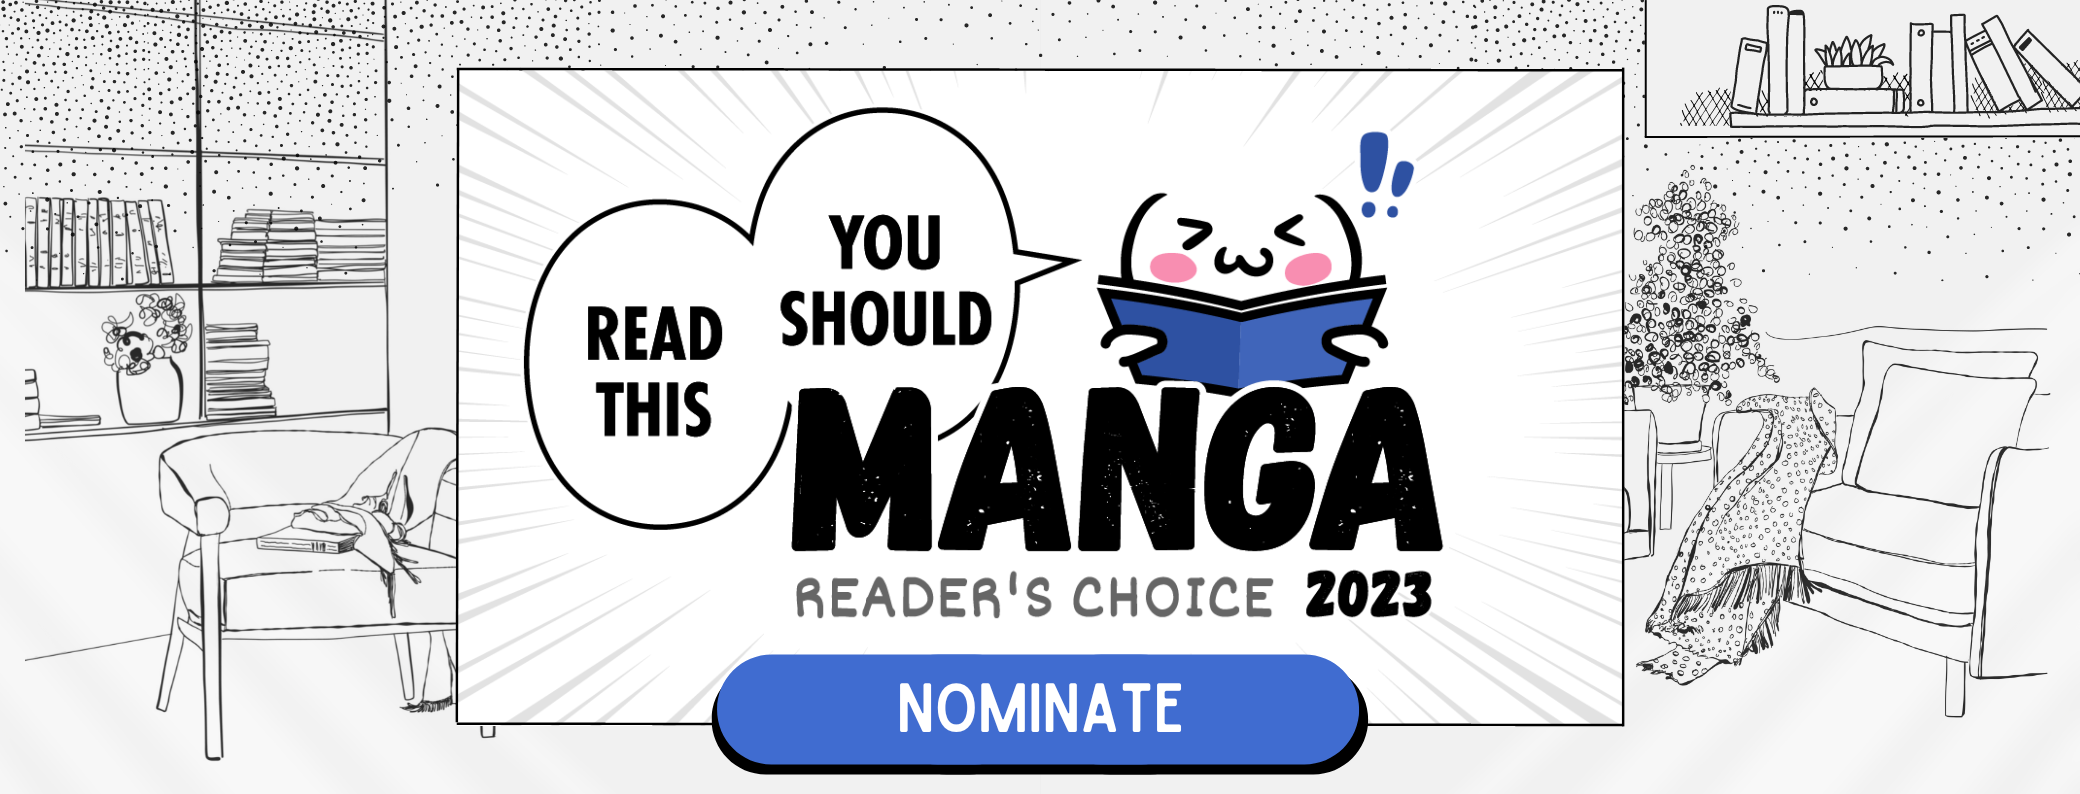 The 13 Best Manga Of 2021, According To MyAnimeList